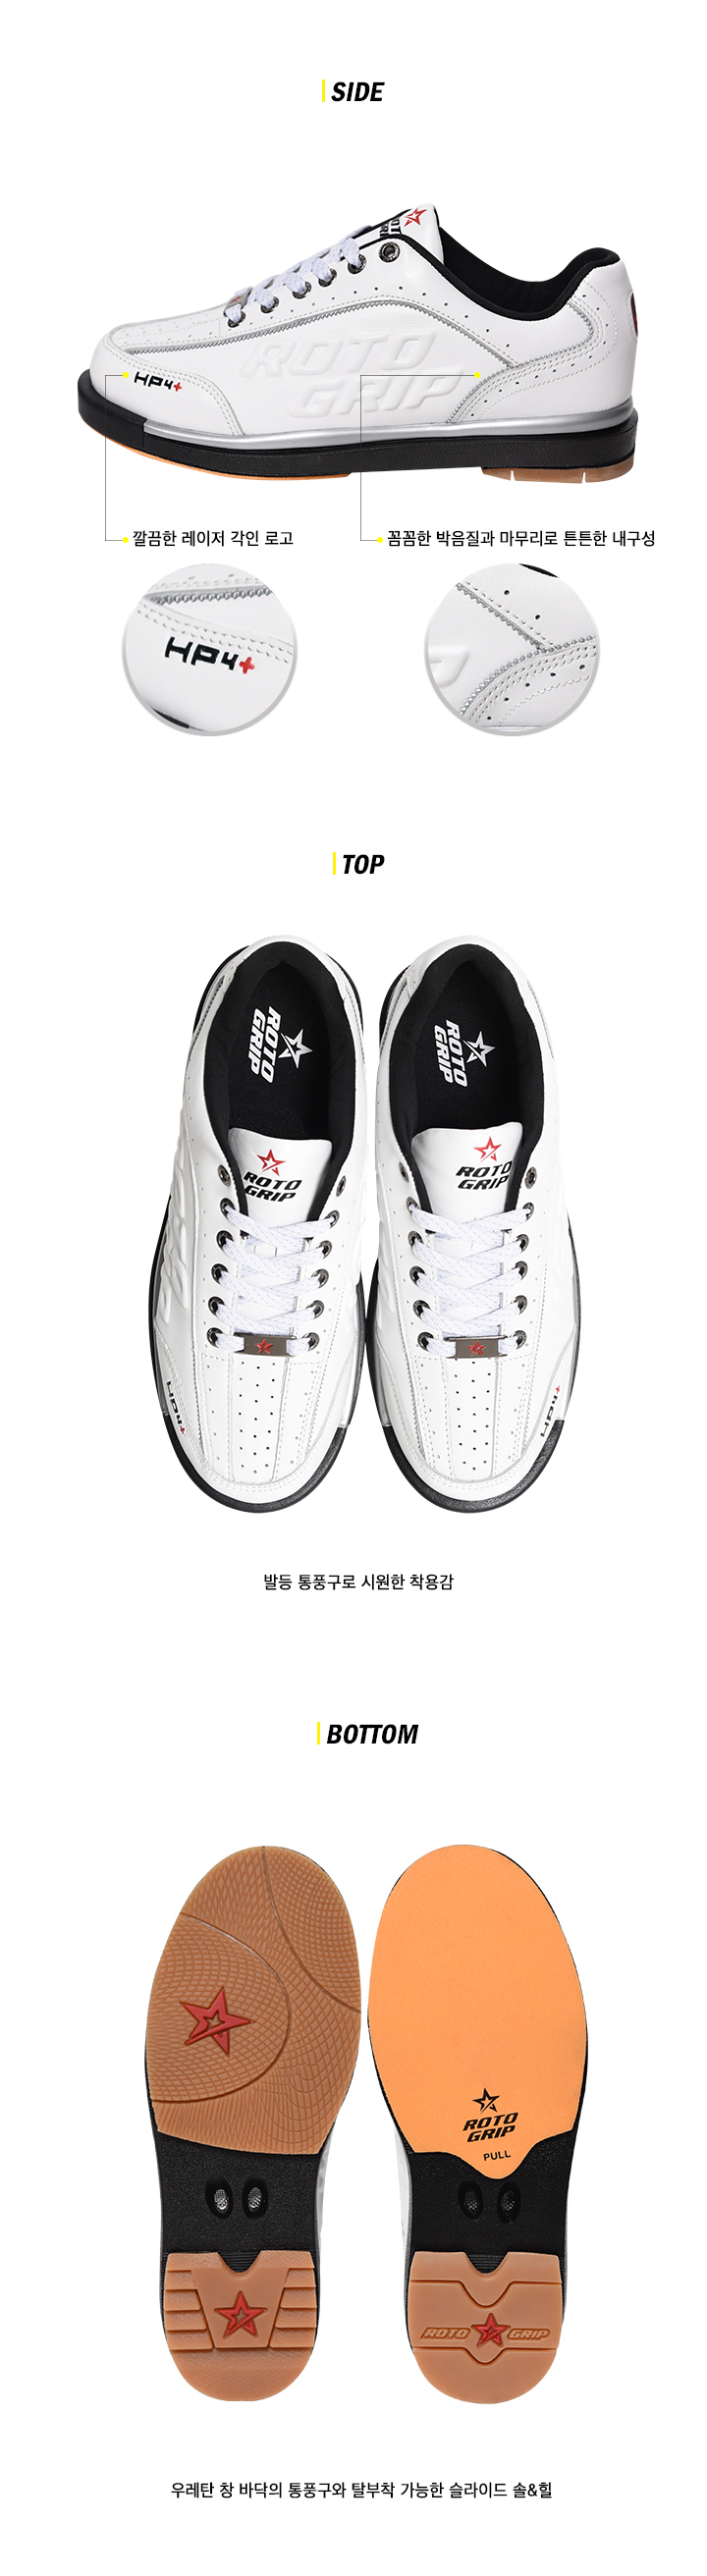 ROTO GRIP HP4 Premium Leather Bowling Shoes Sneakers Black Detachable Sole 